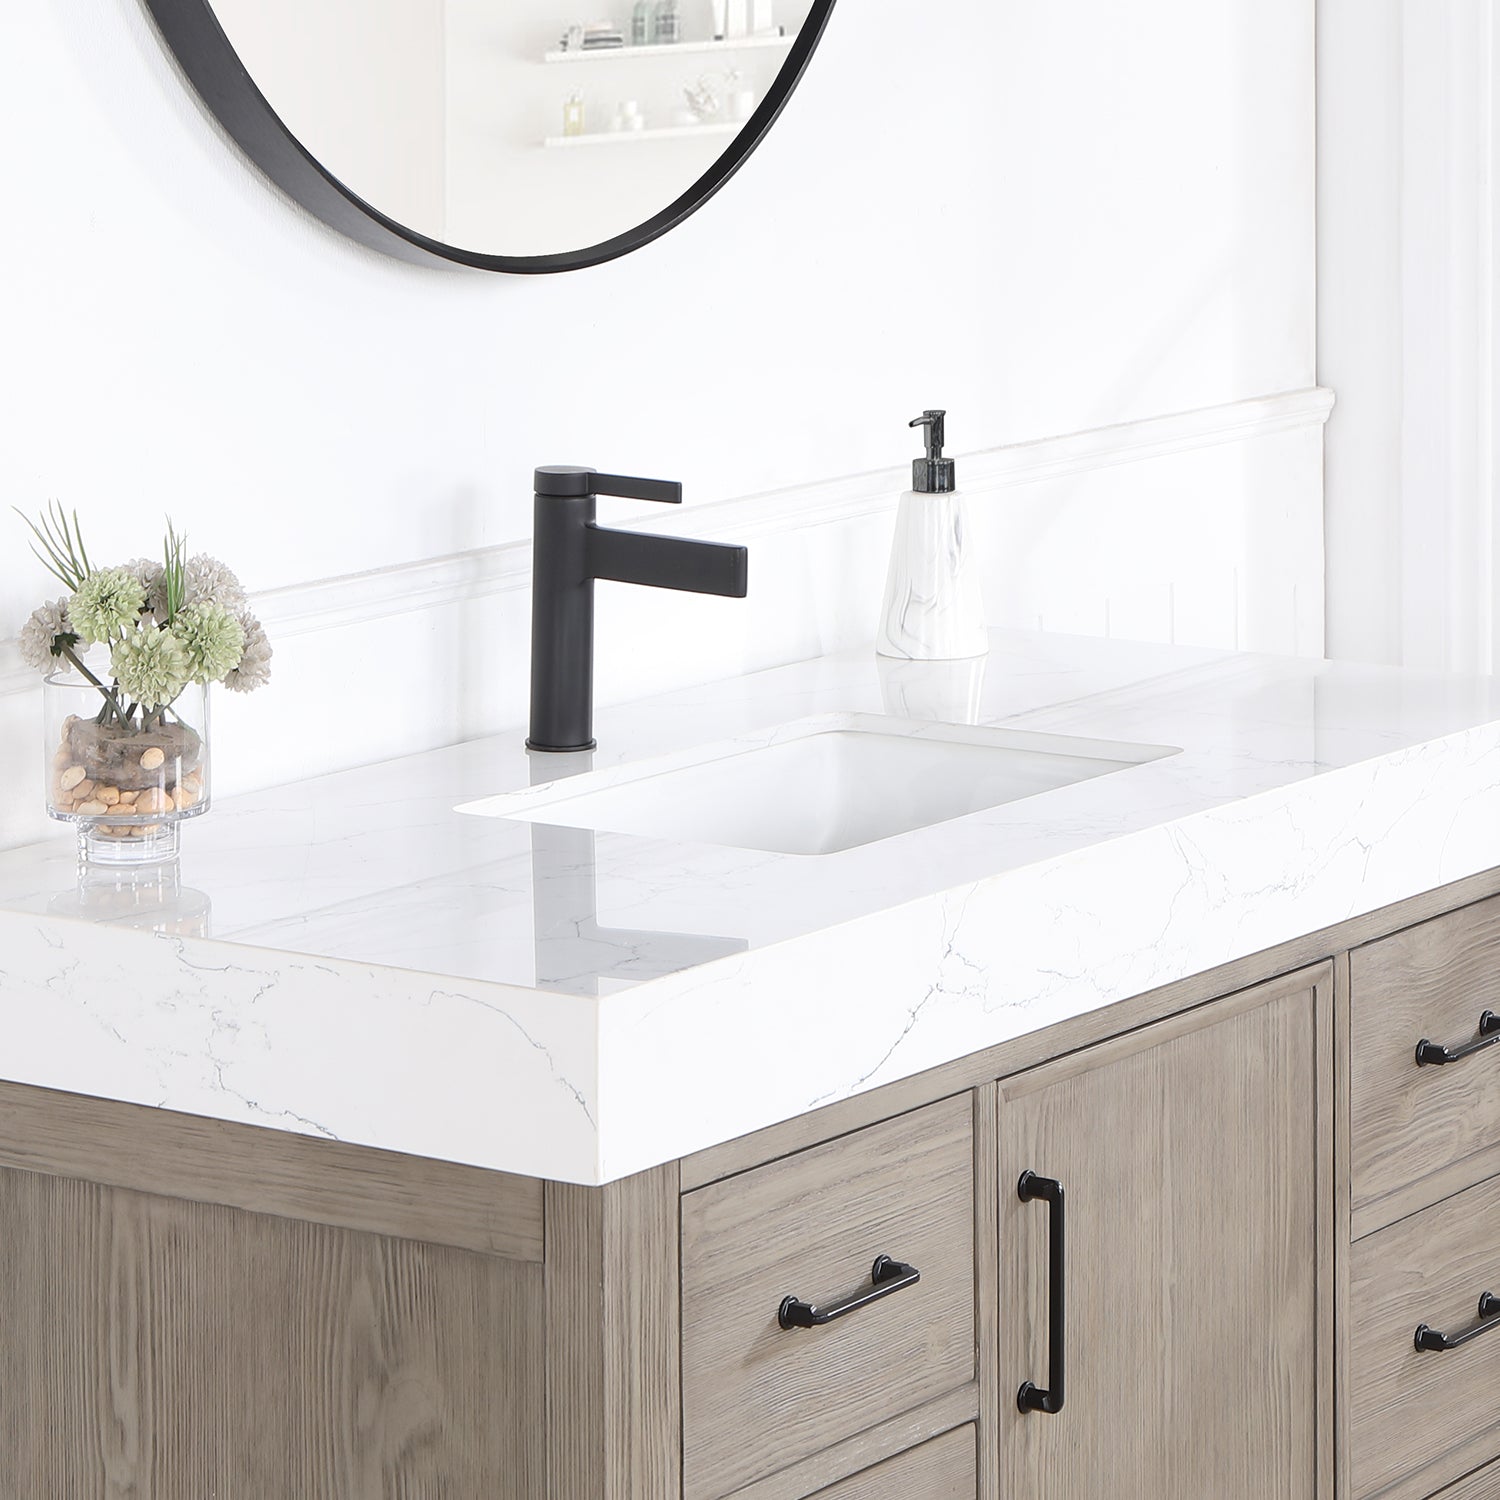 León 48in. Free-standing Single Bathroom Vanity in Fir Wood Grey with Composite top in Lightning White